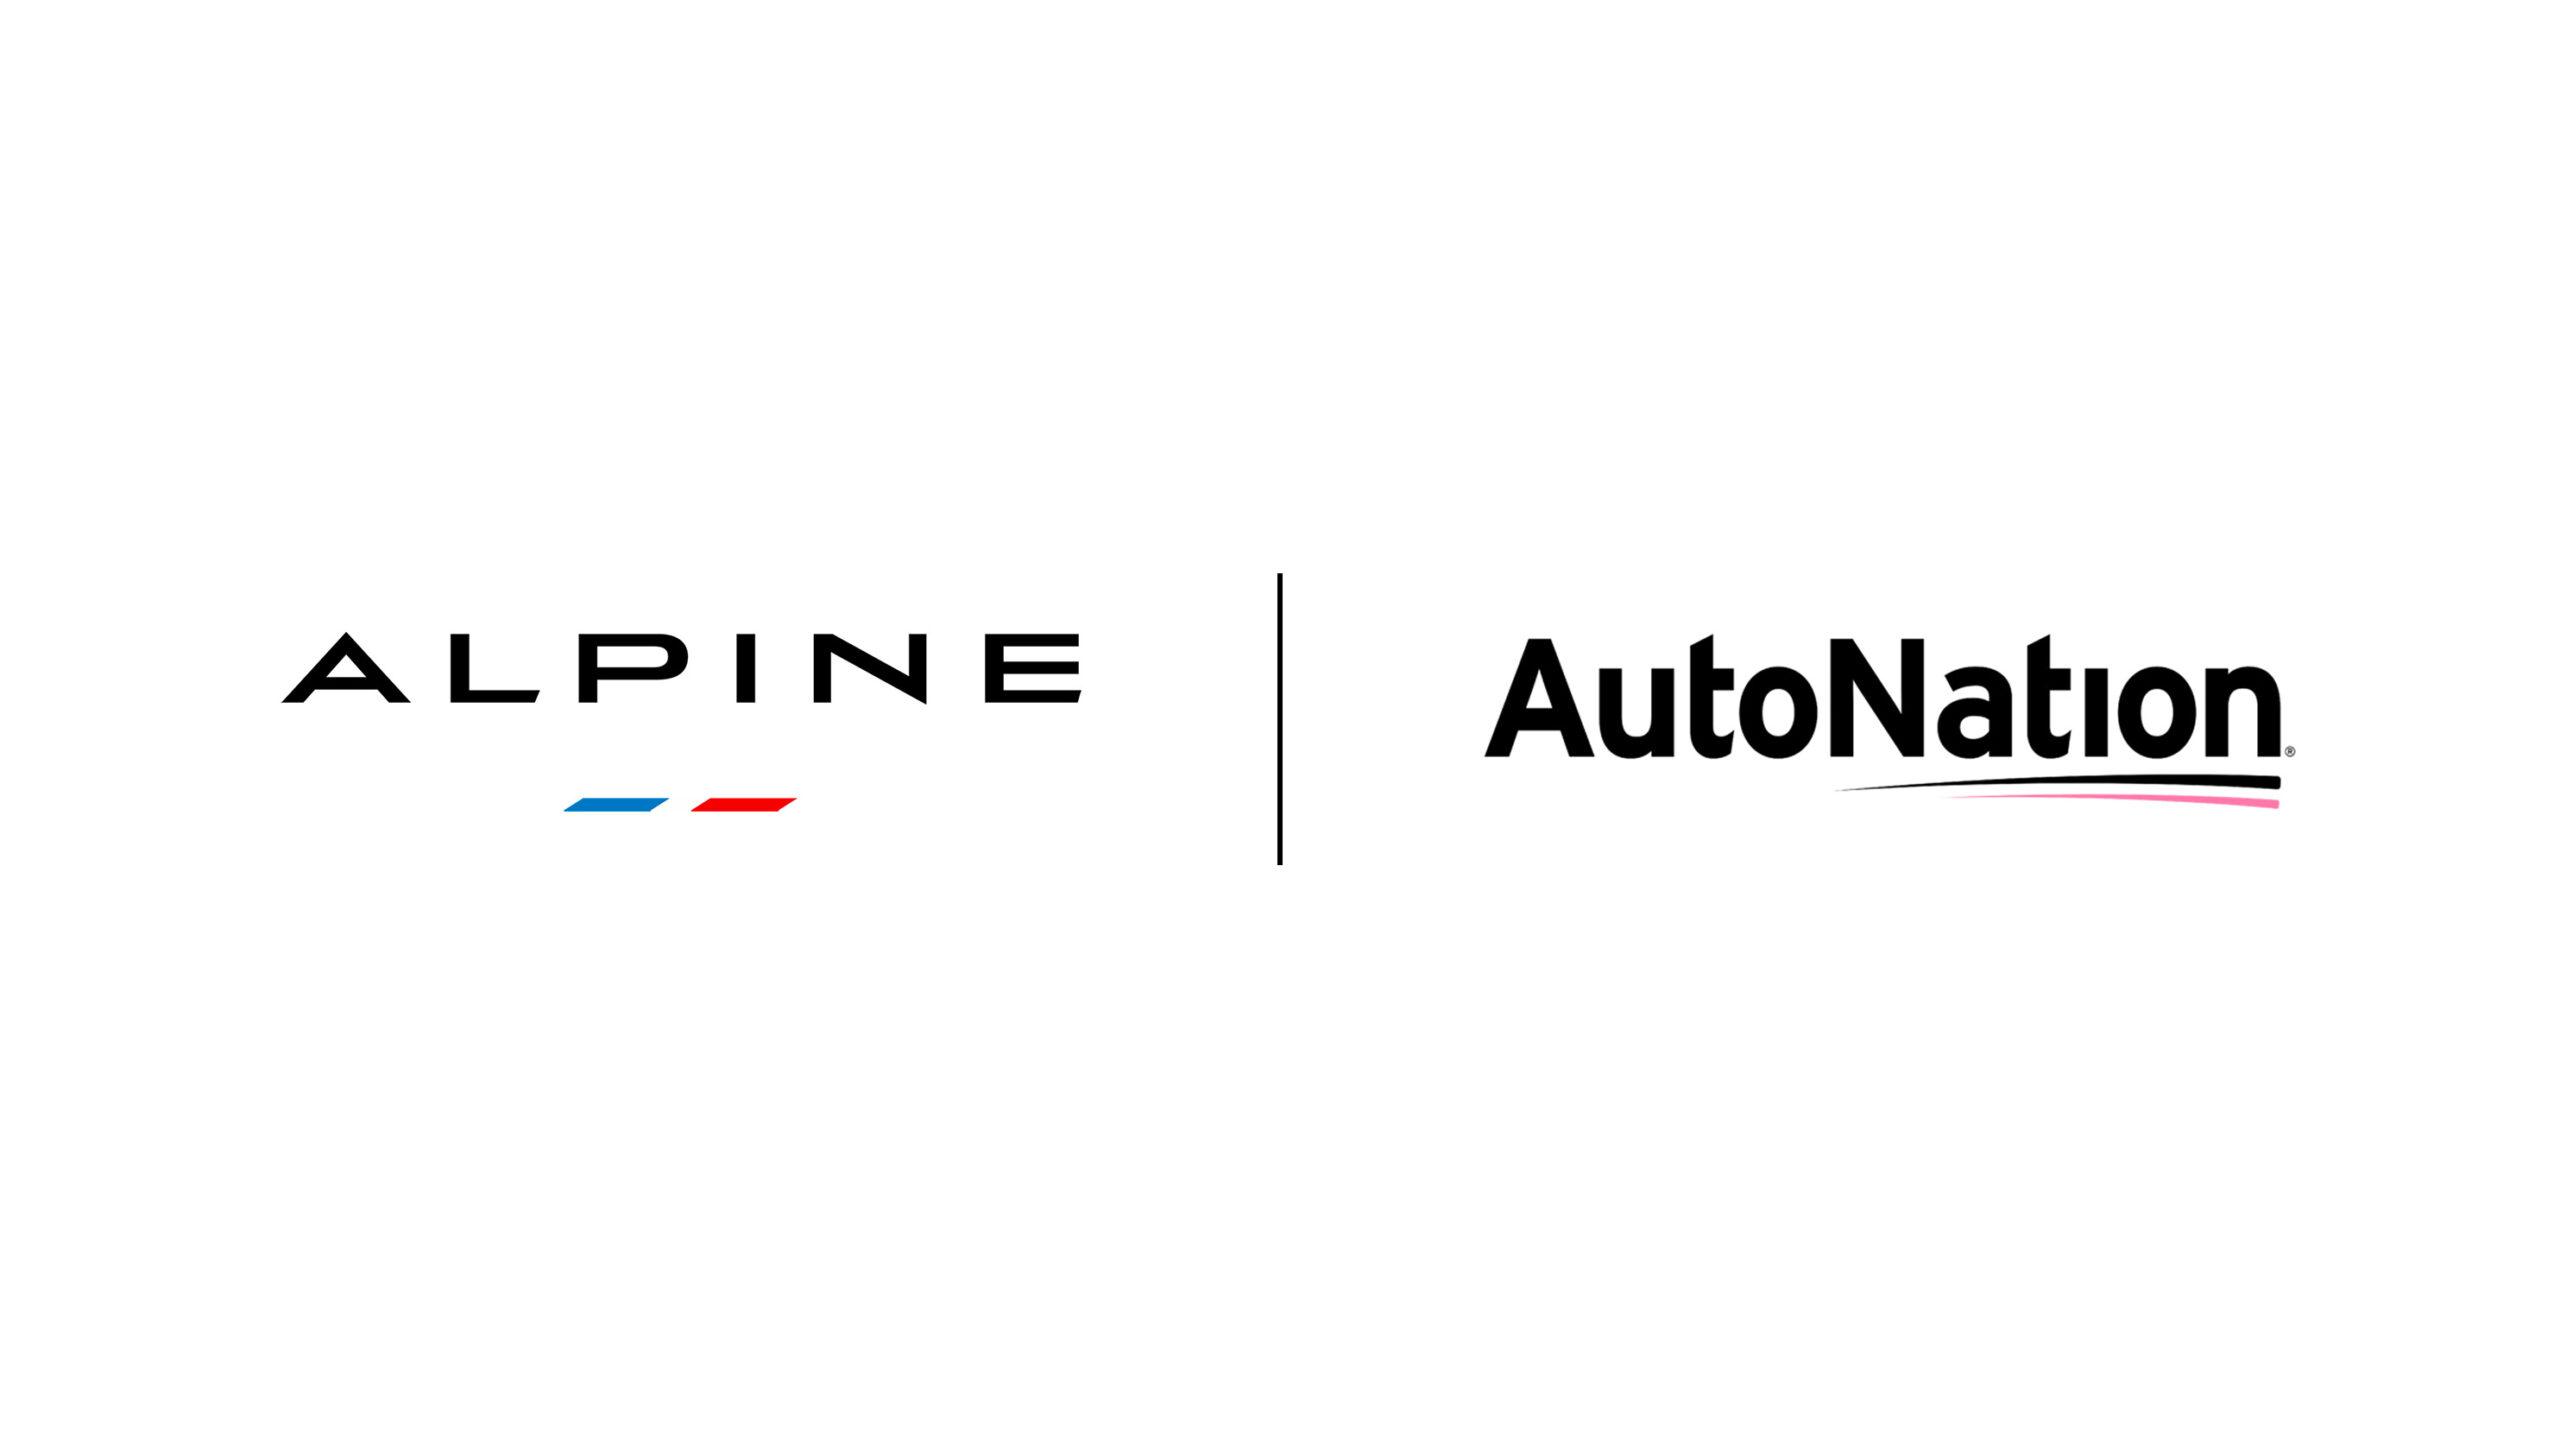 AutoNation to sponsor Alpine F1 at Miami Grand Prix